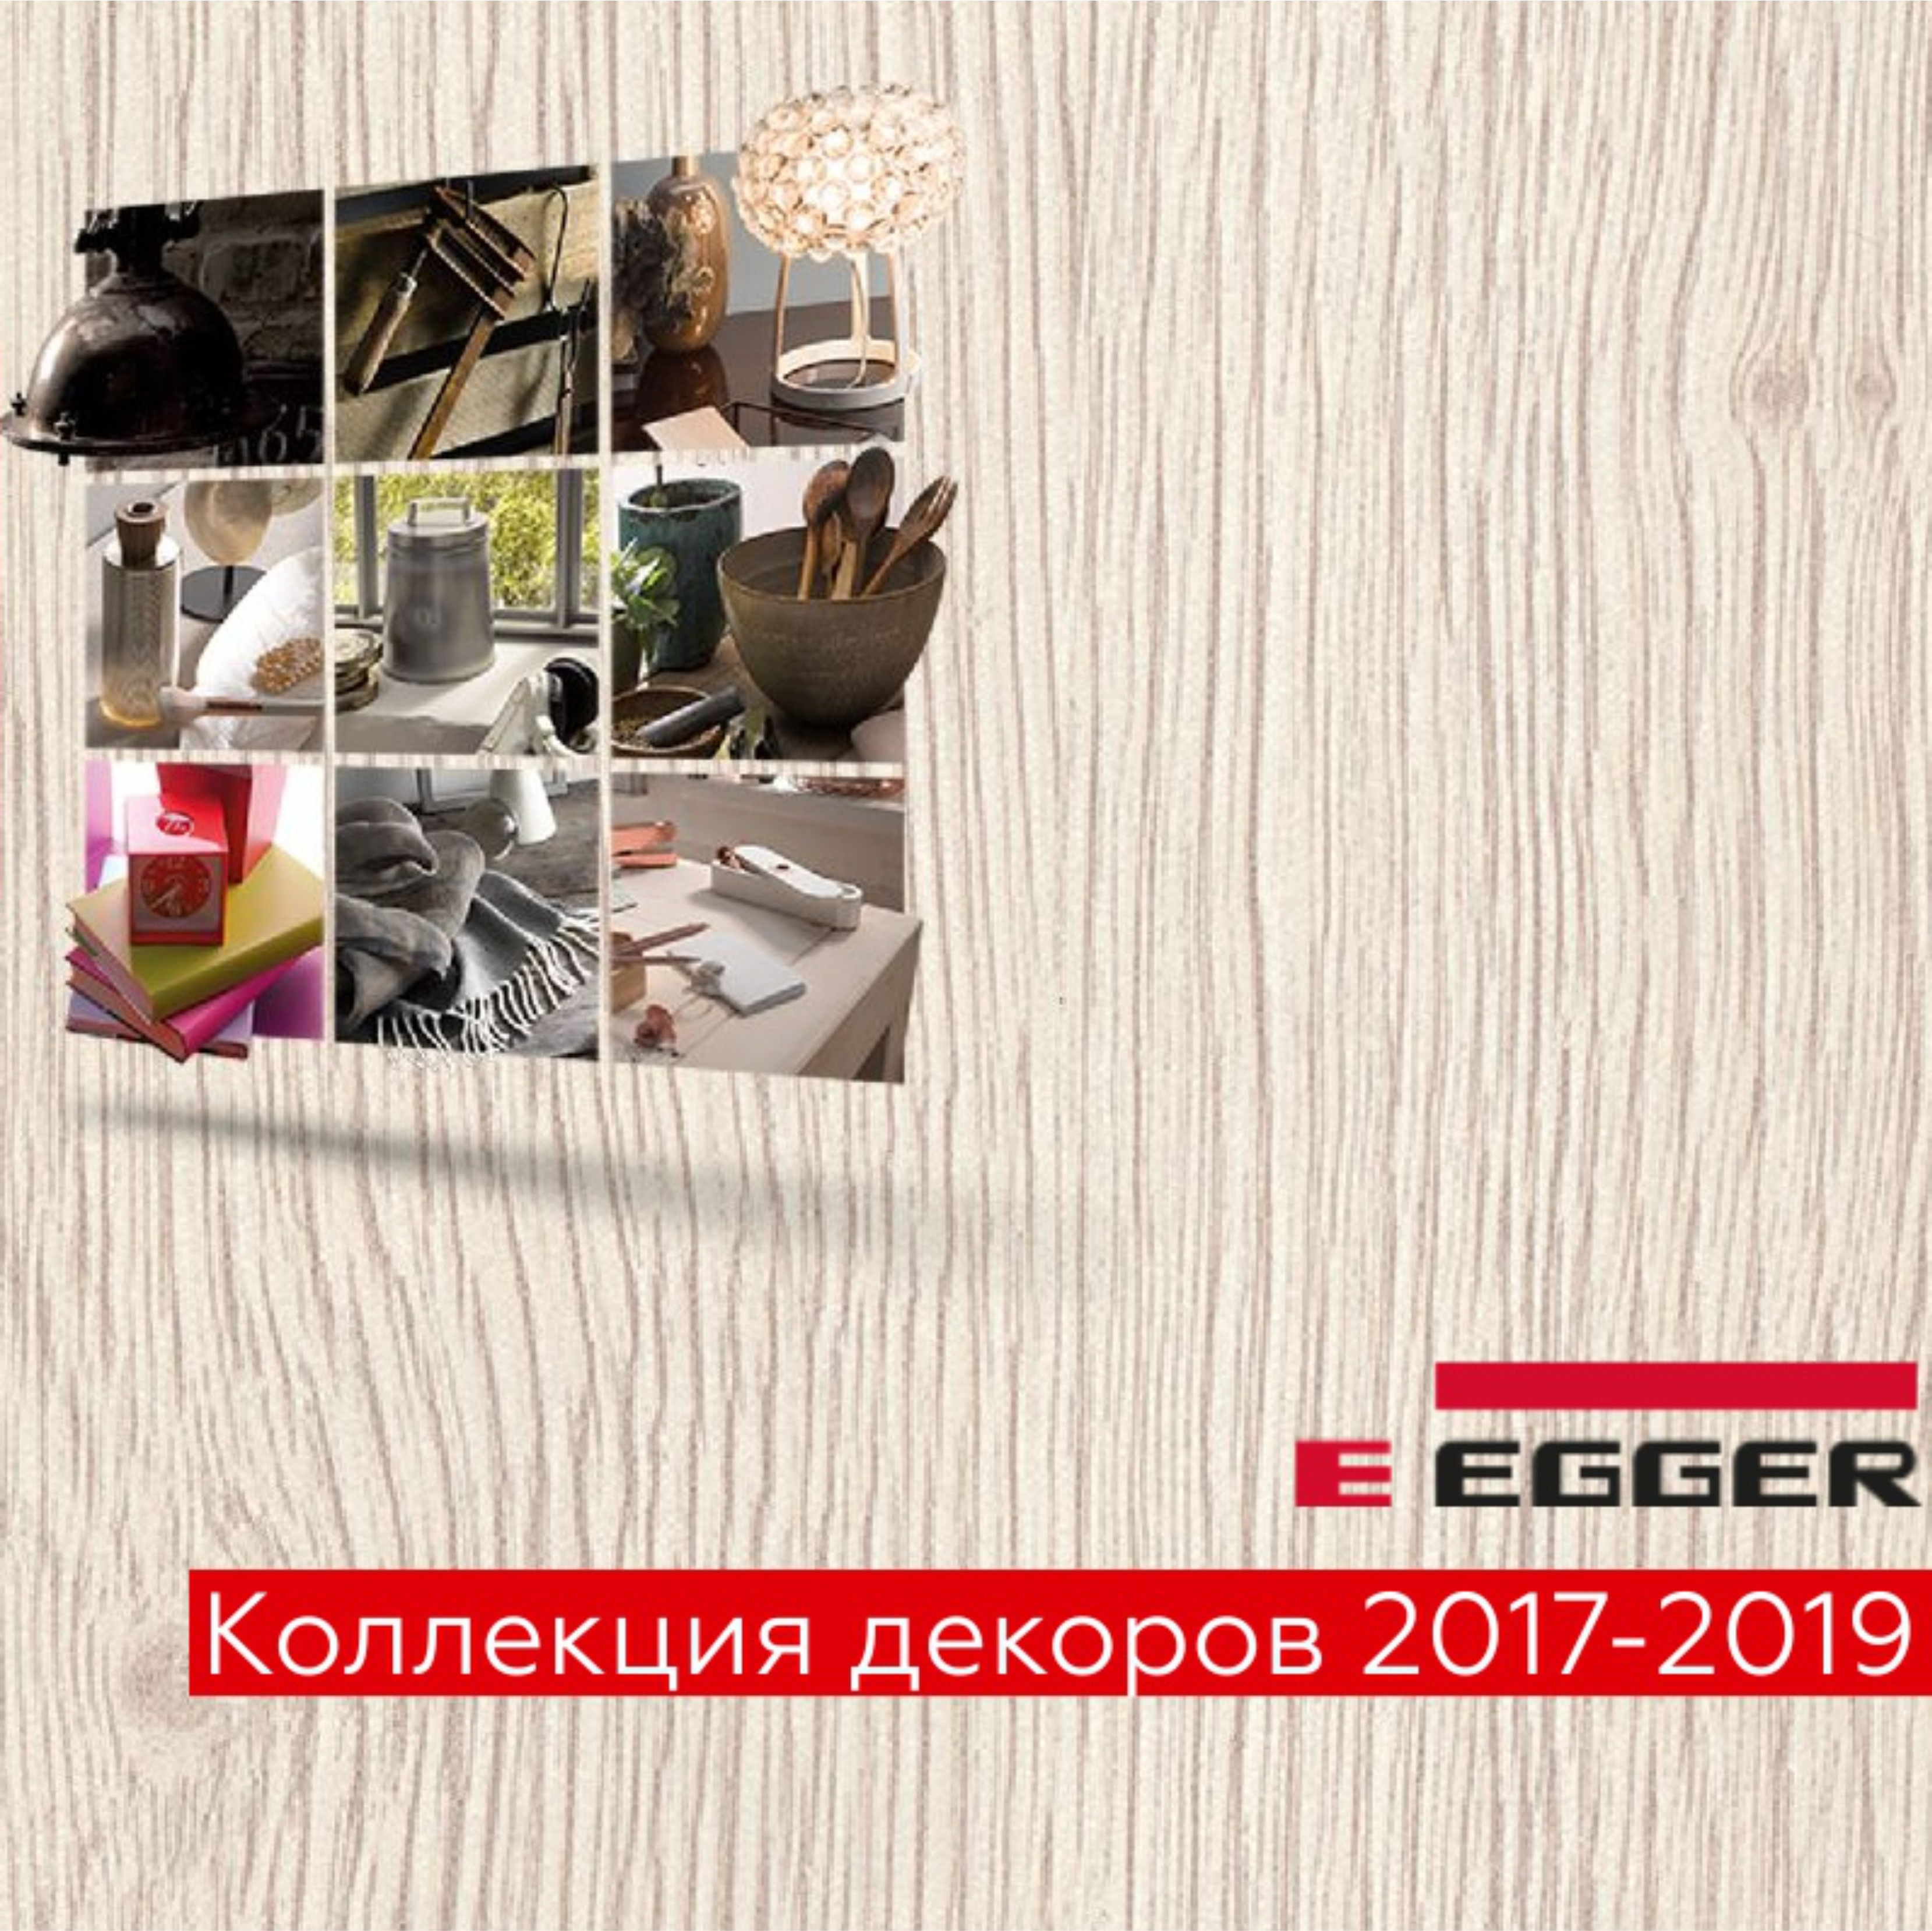 Egger: расширение коллекции декоров 2017-2019